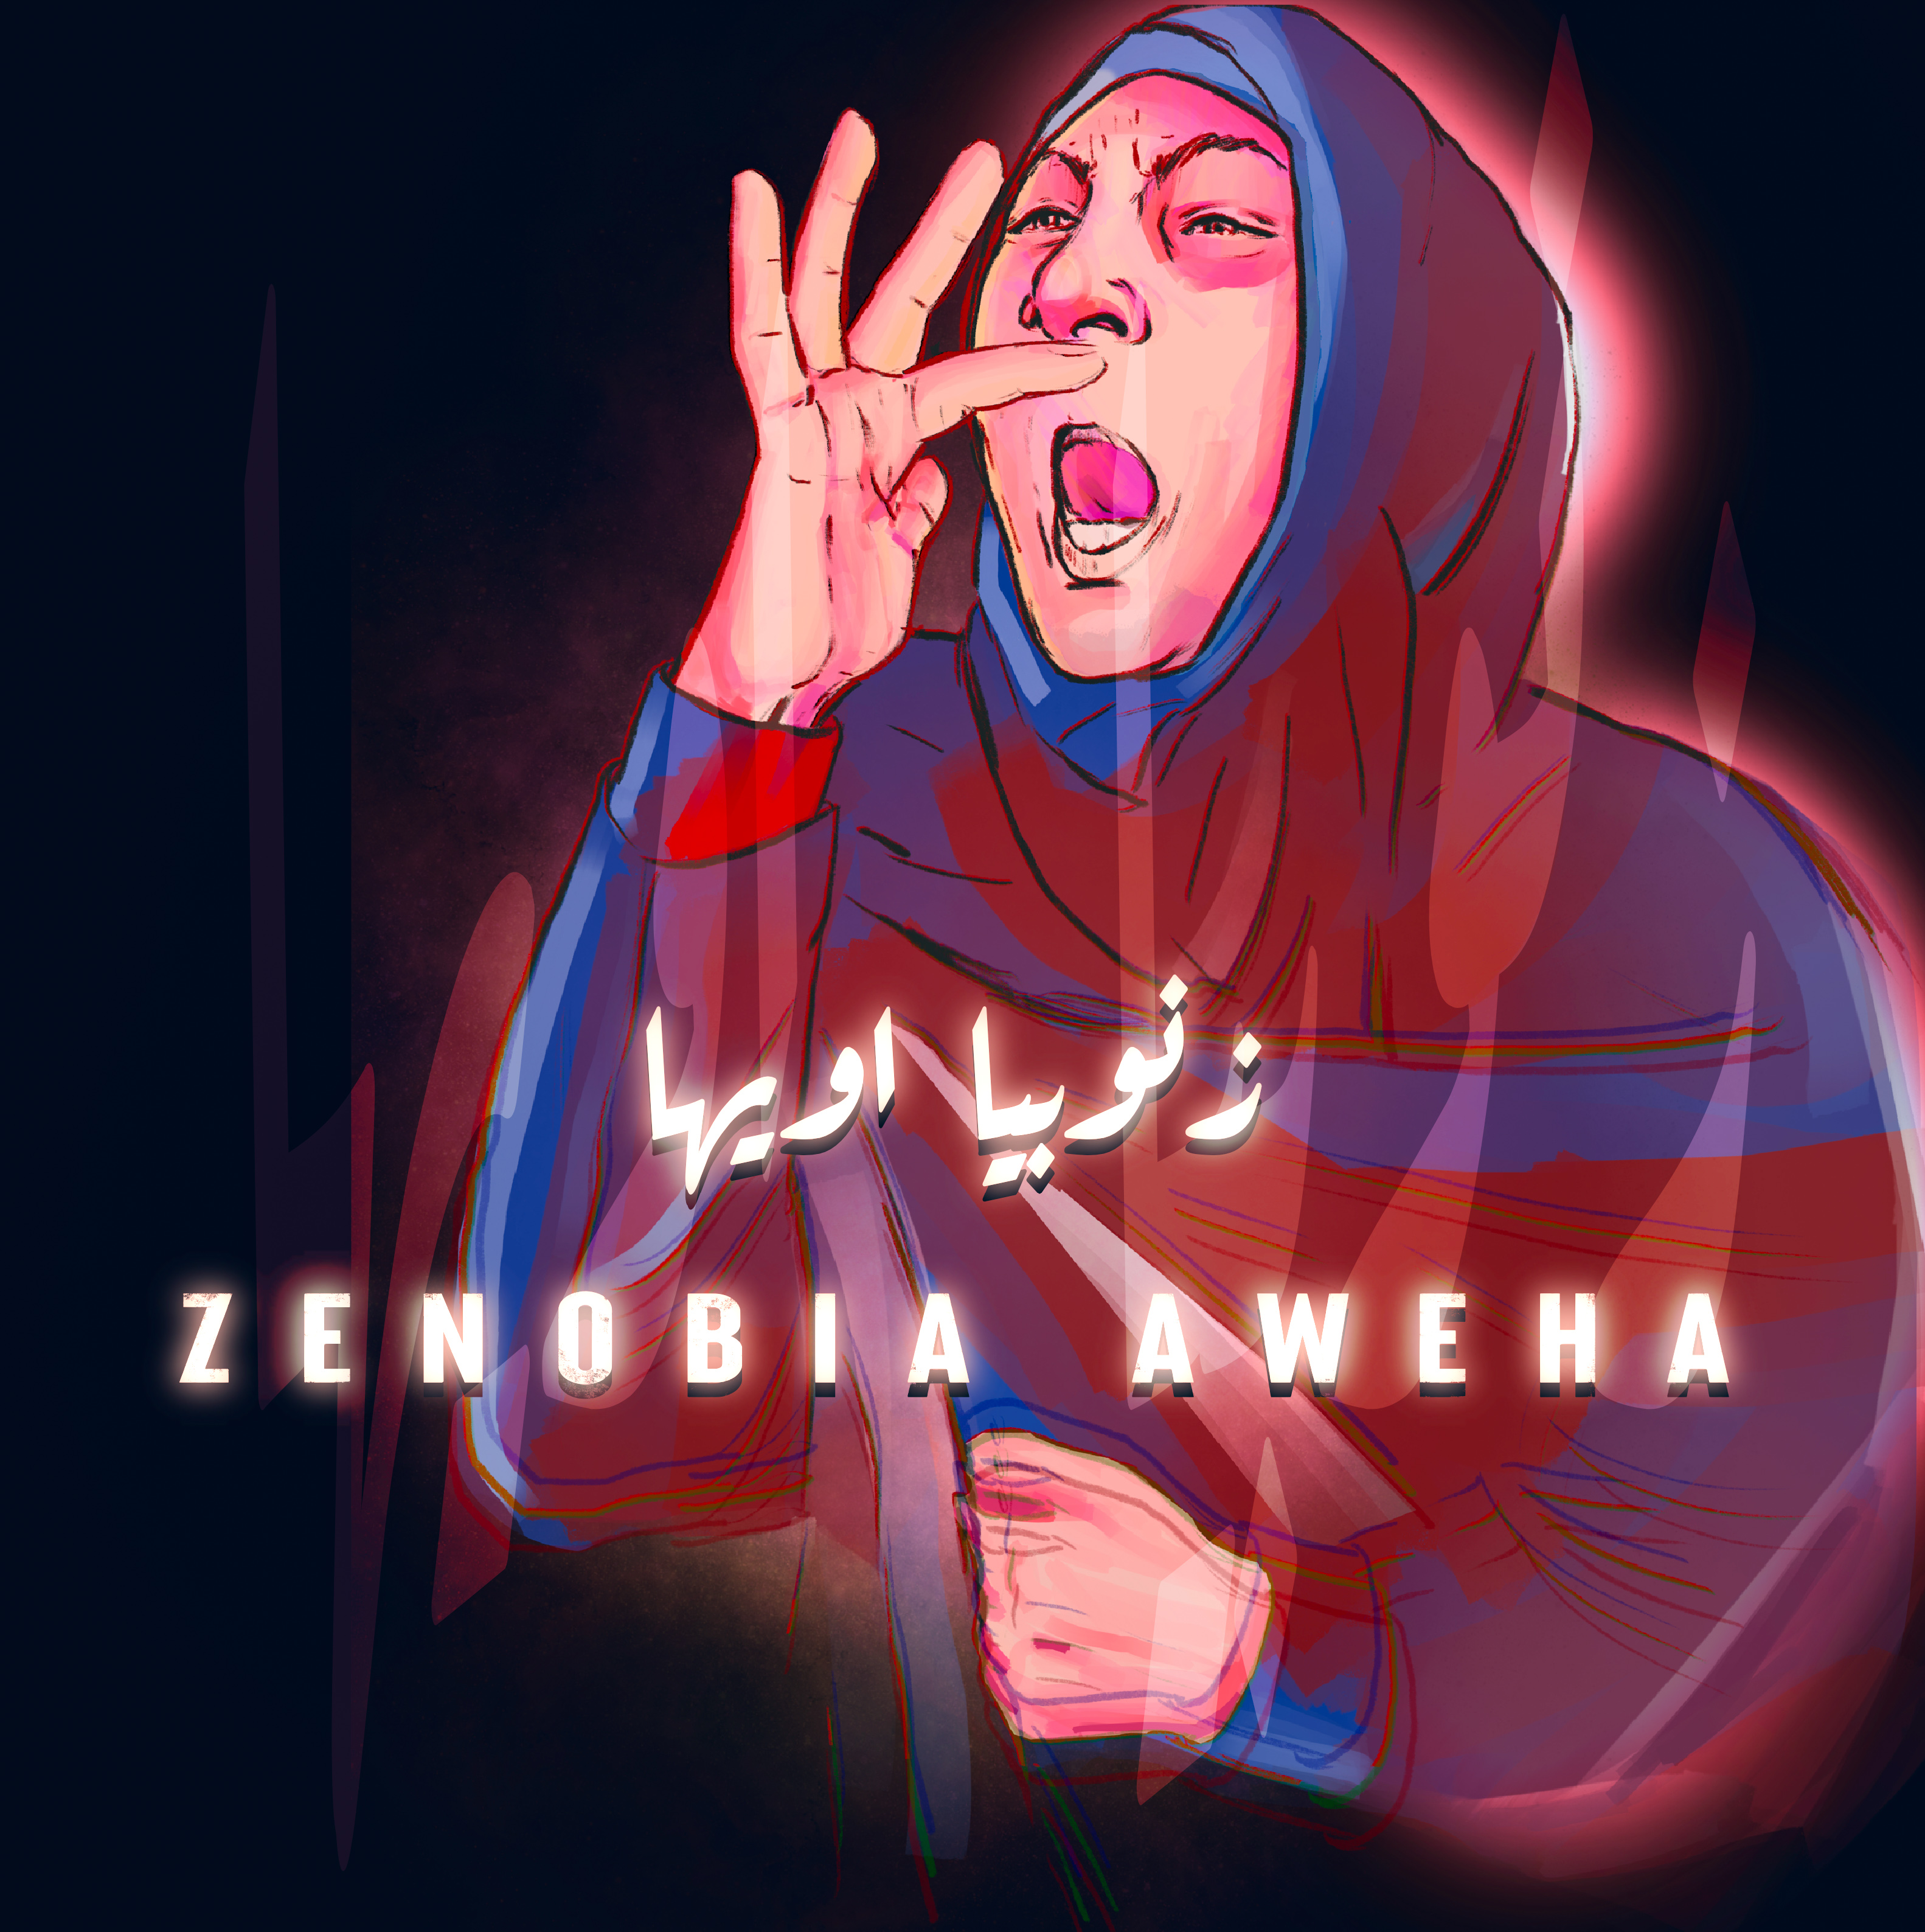 ZENOBIA - A-weha